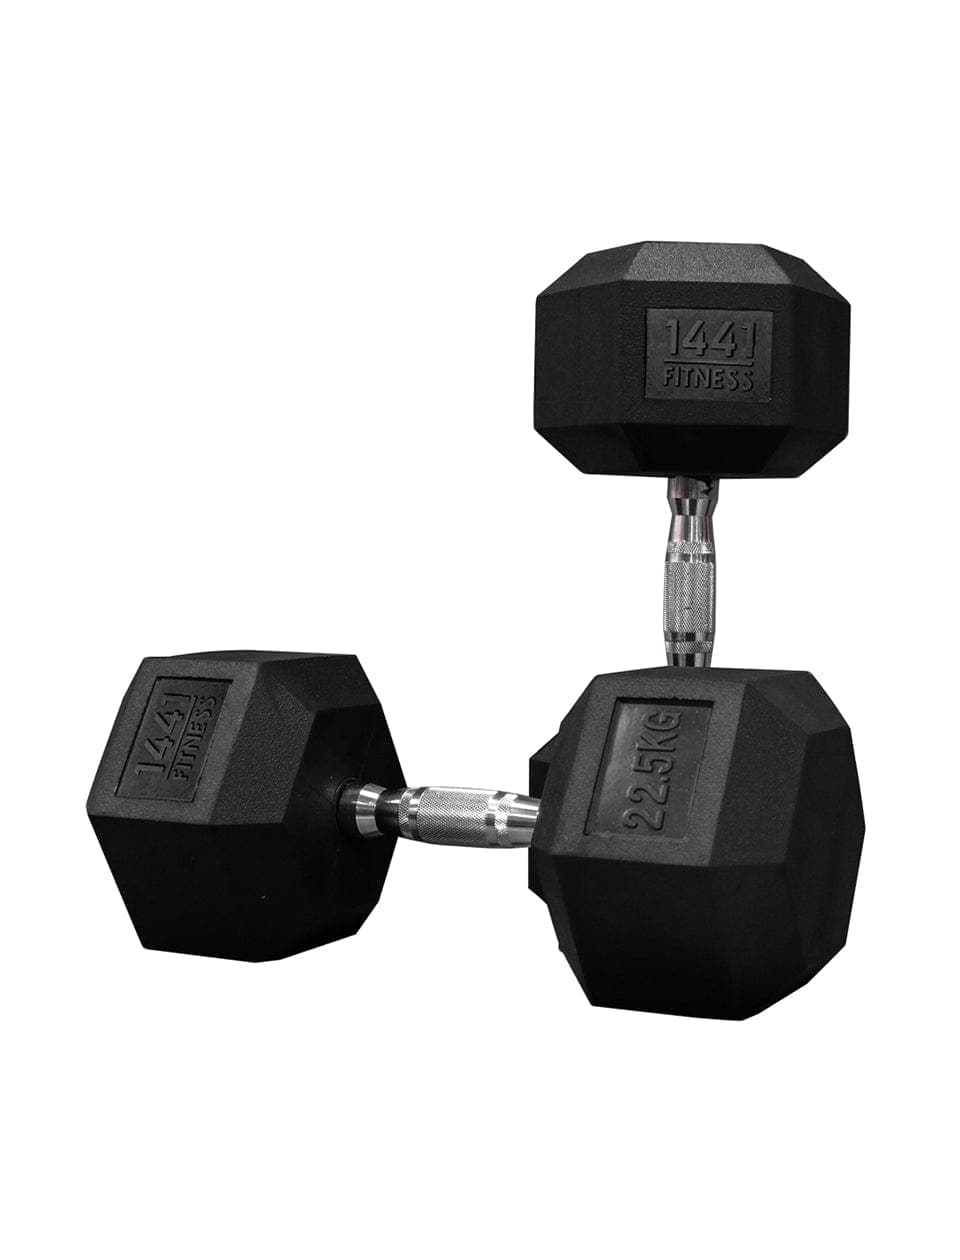 PRSAE Dumbbells 22.5 kg 1441 Fitness Rubber Hex Dumbbells in Kilogram | Sold In Pairs (2 pcs) | Tough & Durable | Chrome Plated Economical Handle